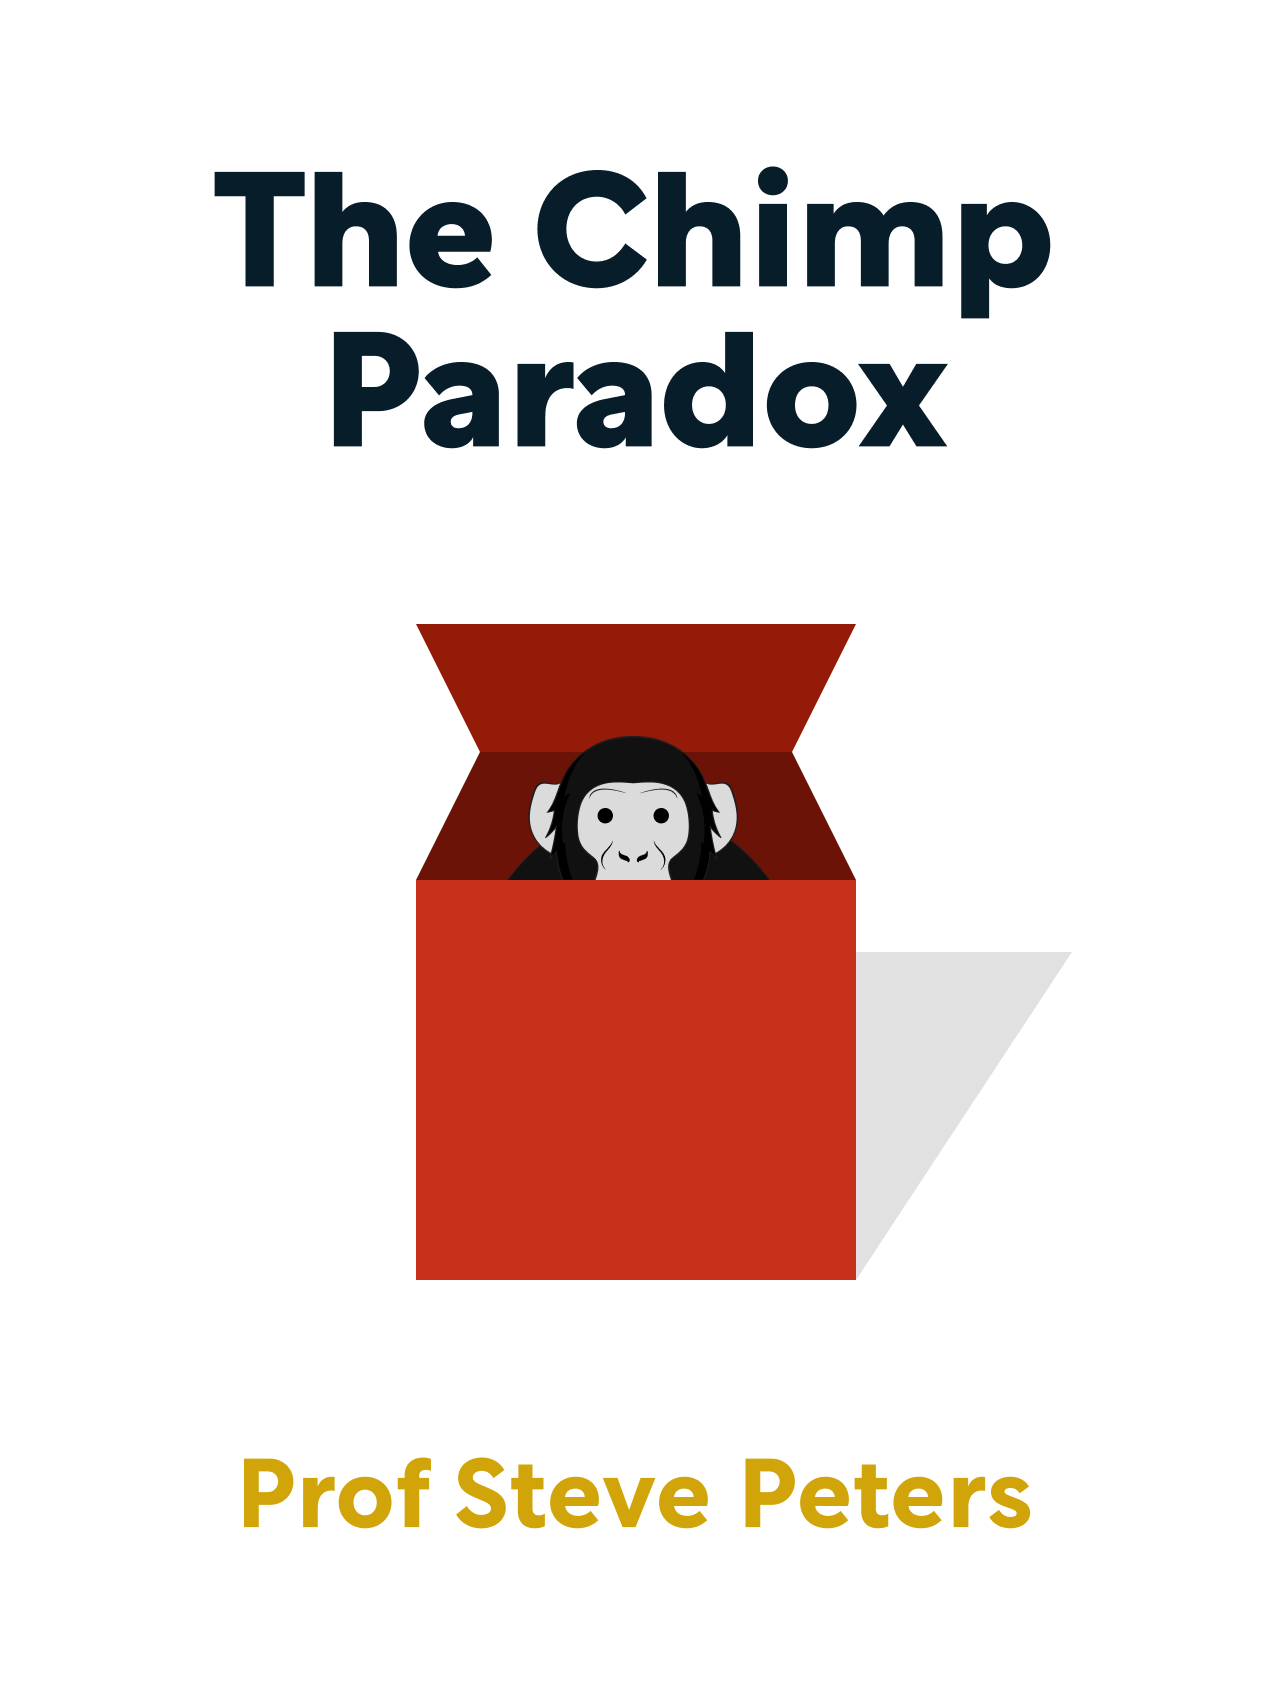 the-chimp-paradox-cover-at-8x.png